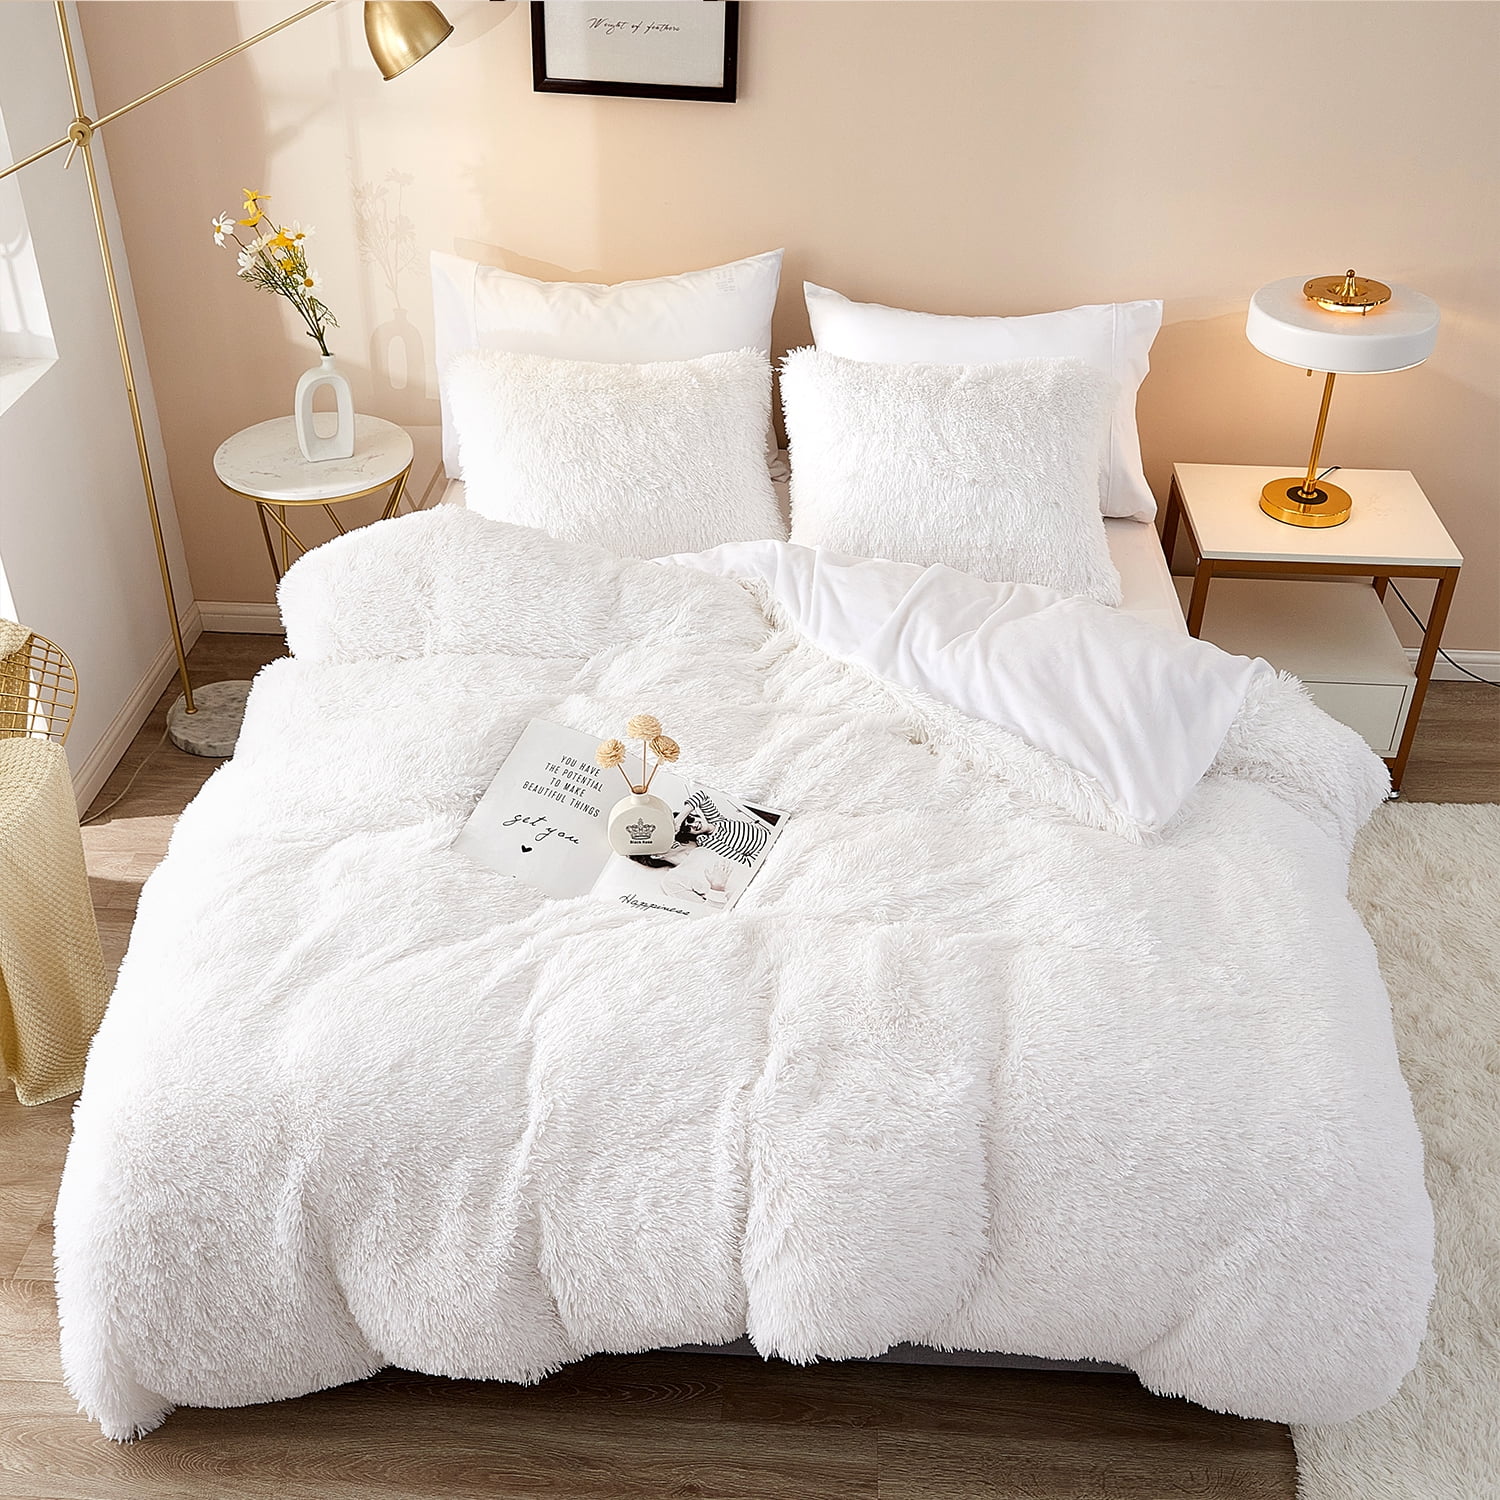 Teddy Bear Fleece Star Duvet Cover Set Printed Cozy Warm Winter Bedding 